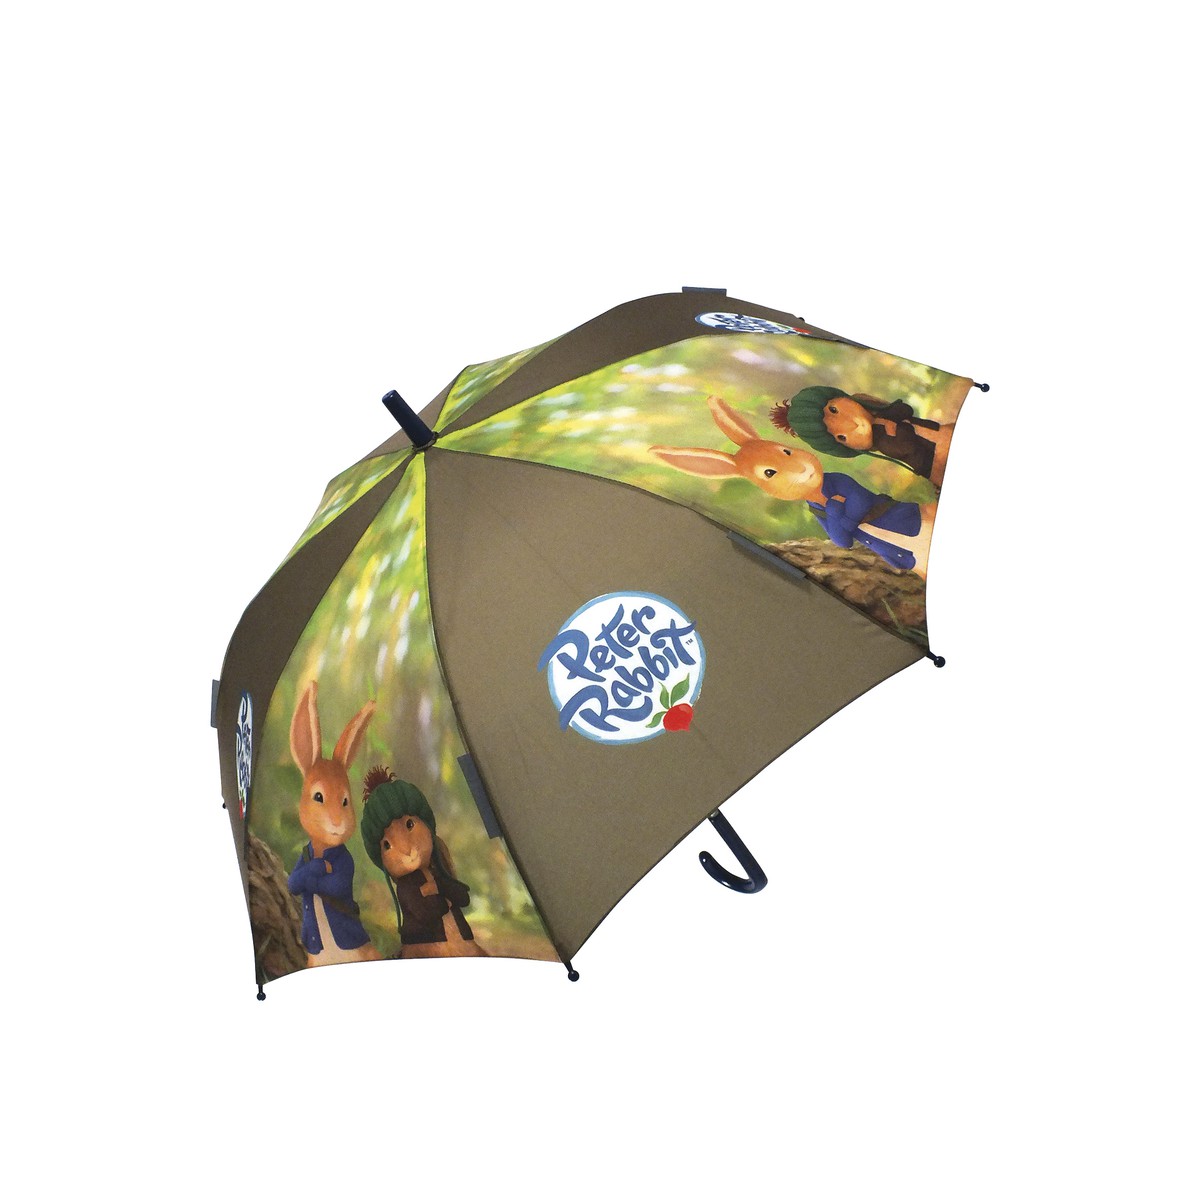   Peter Rabbit Adventurer Parapluie  